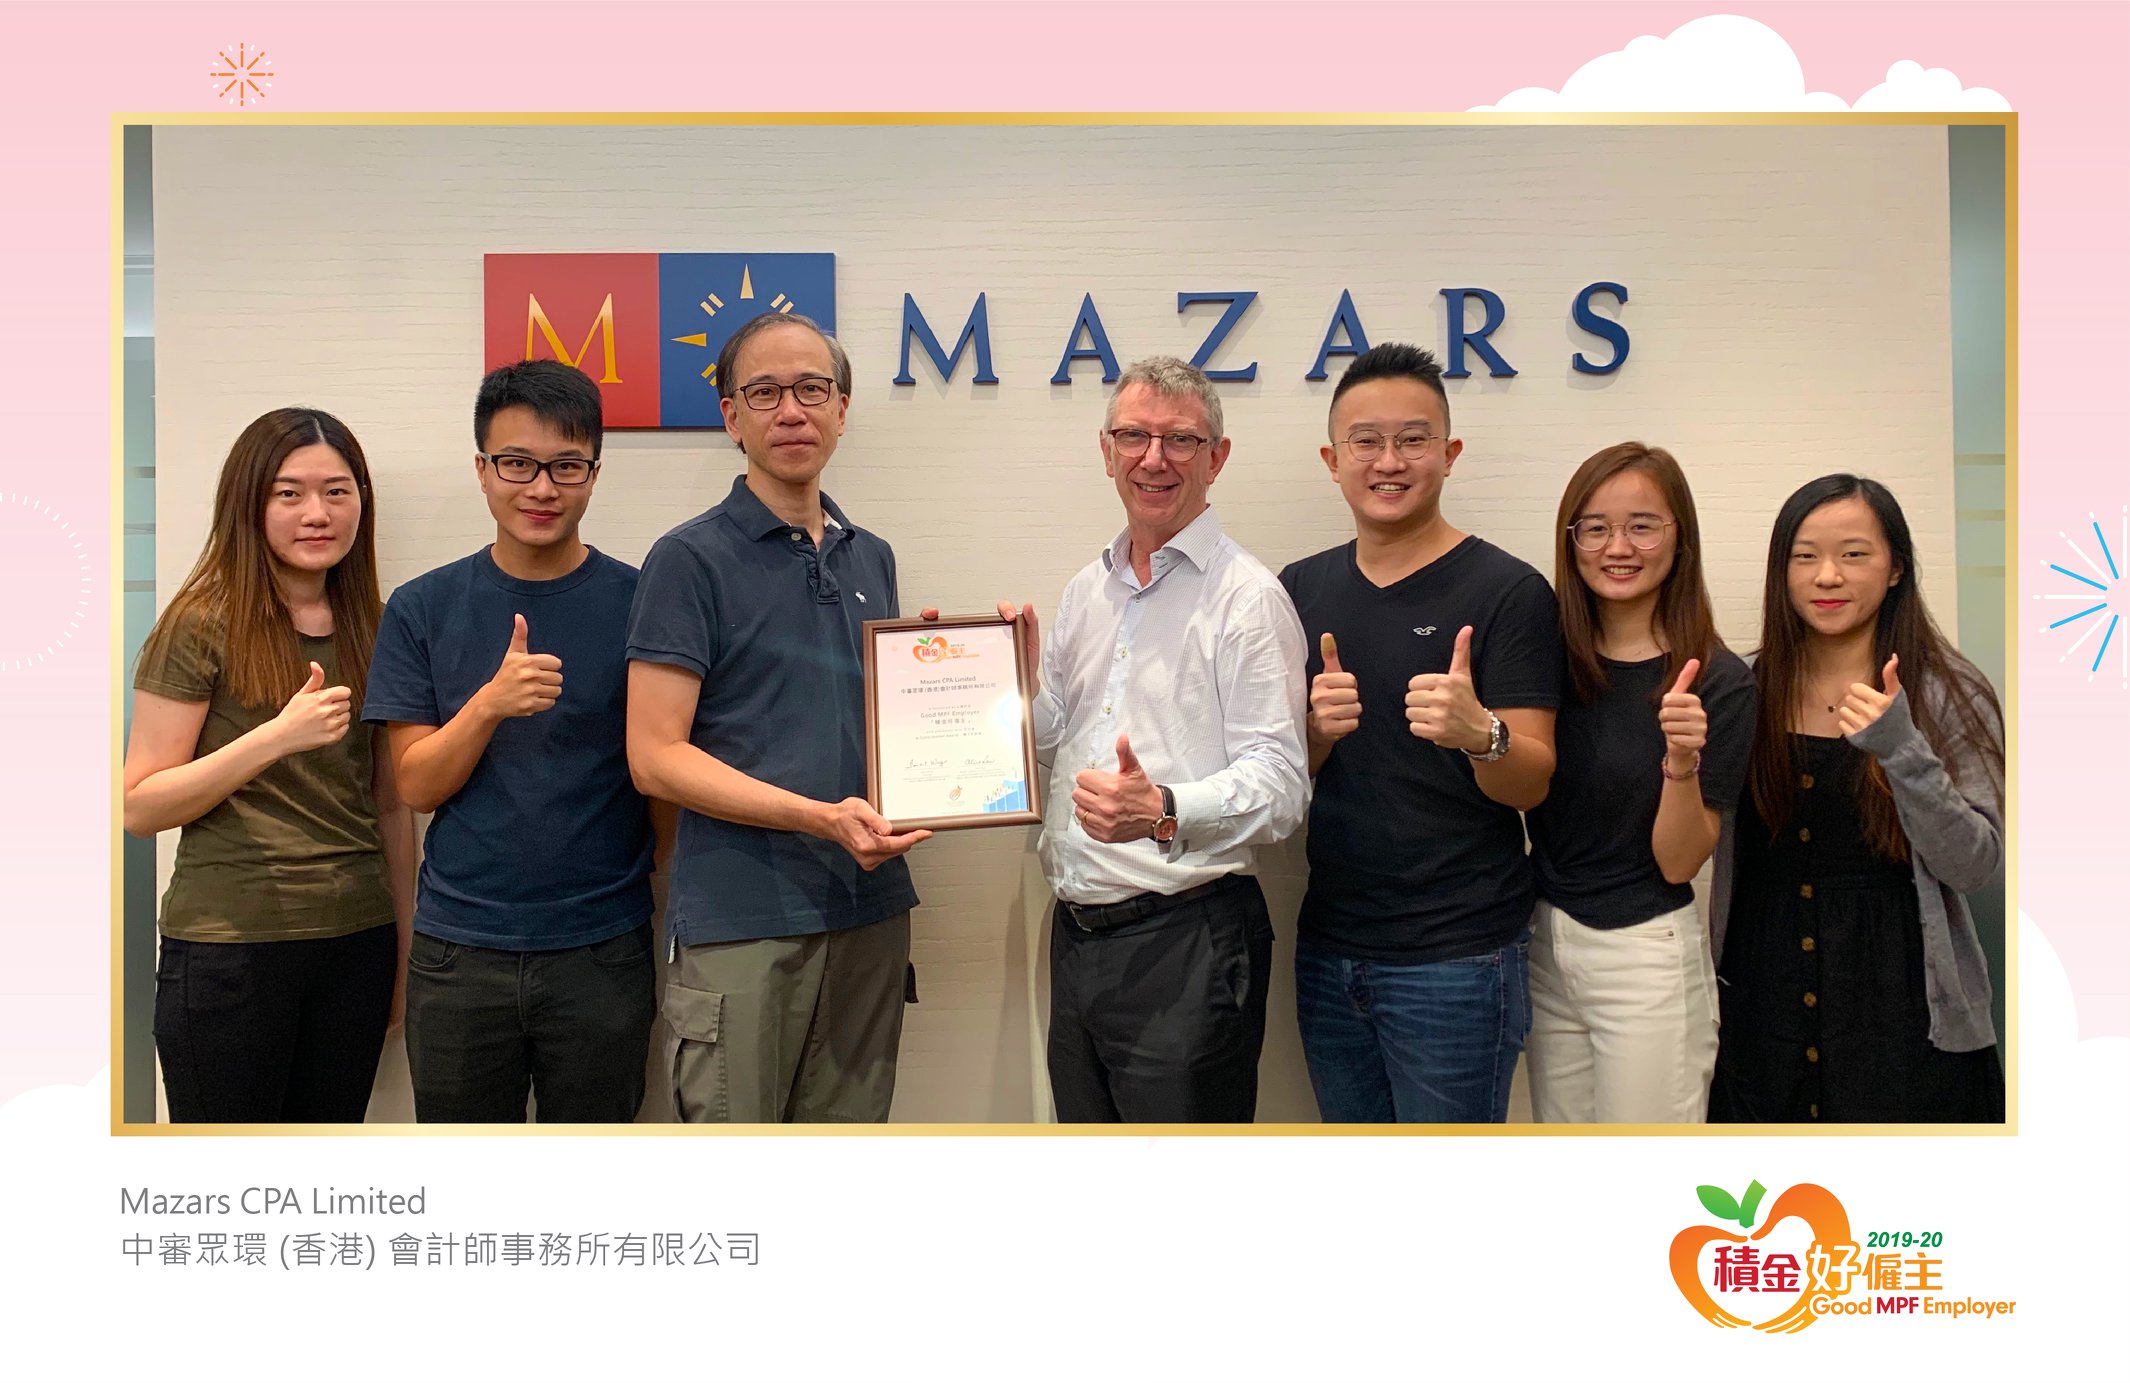 Mazars CPA Limited 中審眾環 (香港) 會計師事務所有限公司